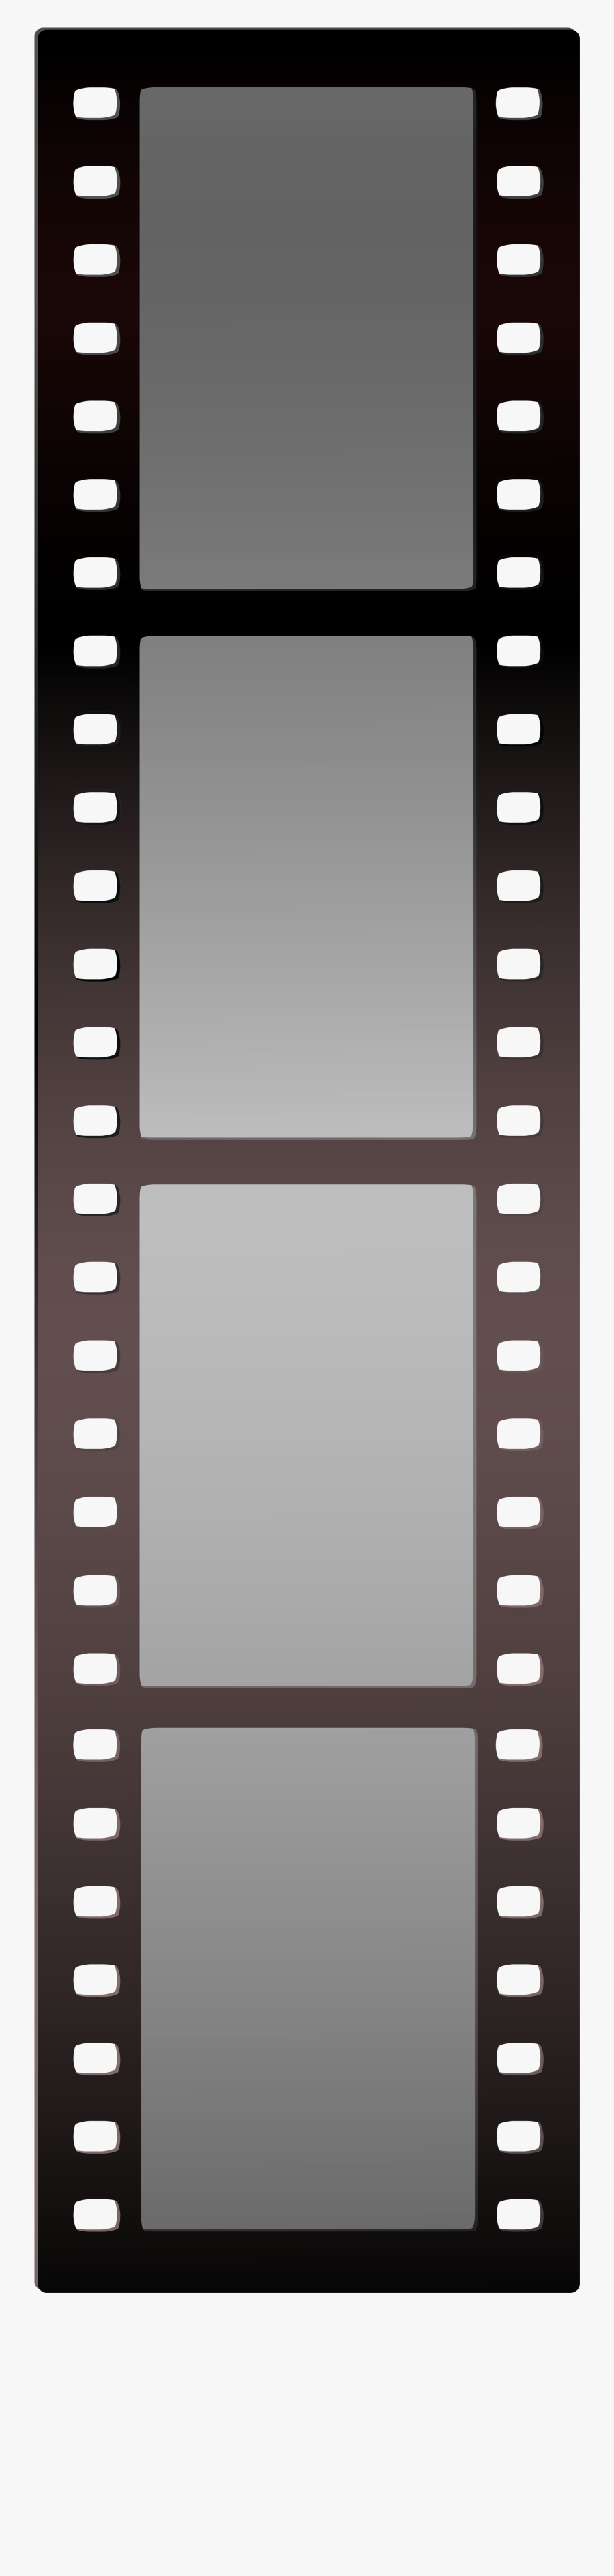 Photo Tape Png Clip Art - Cinema Tape Png, Transparent Clipart